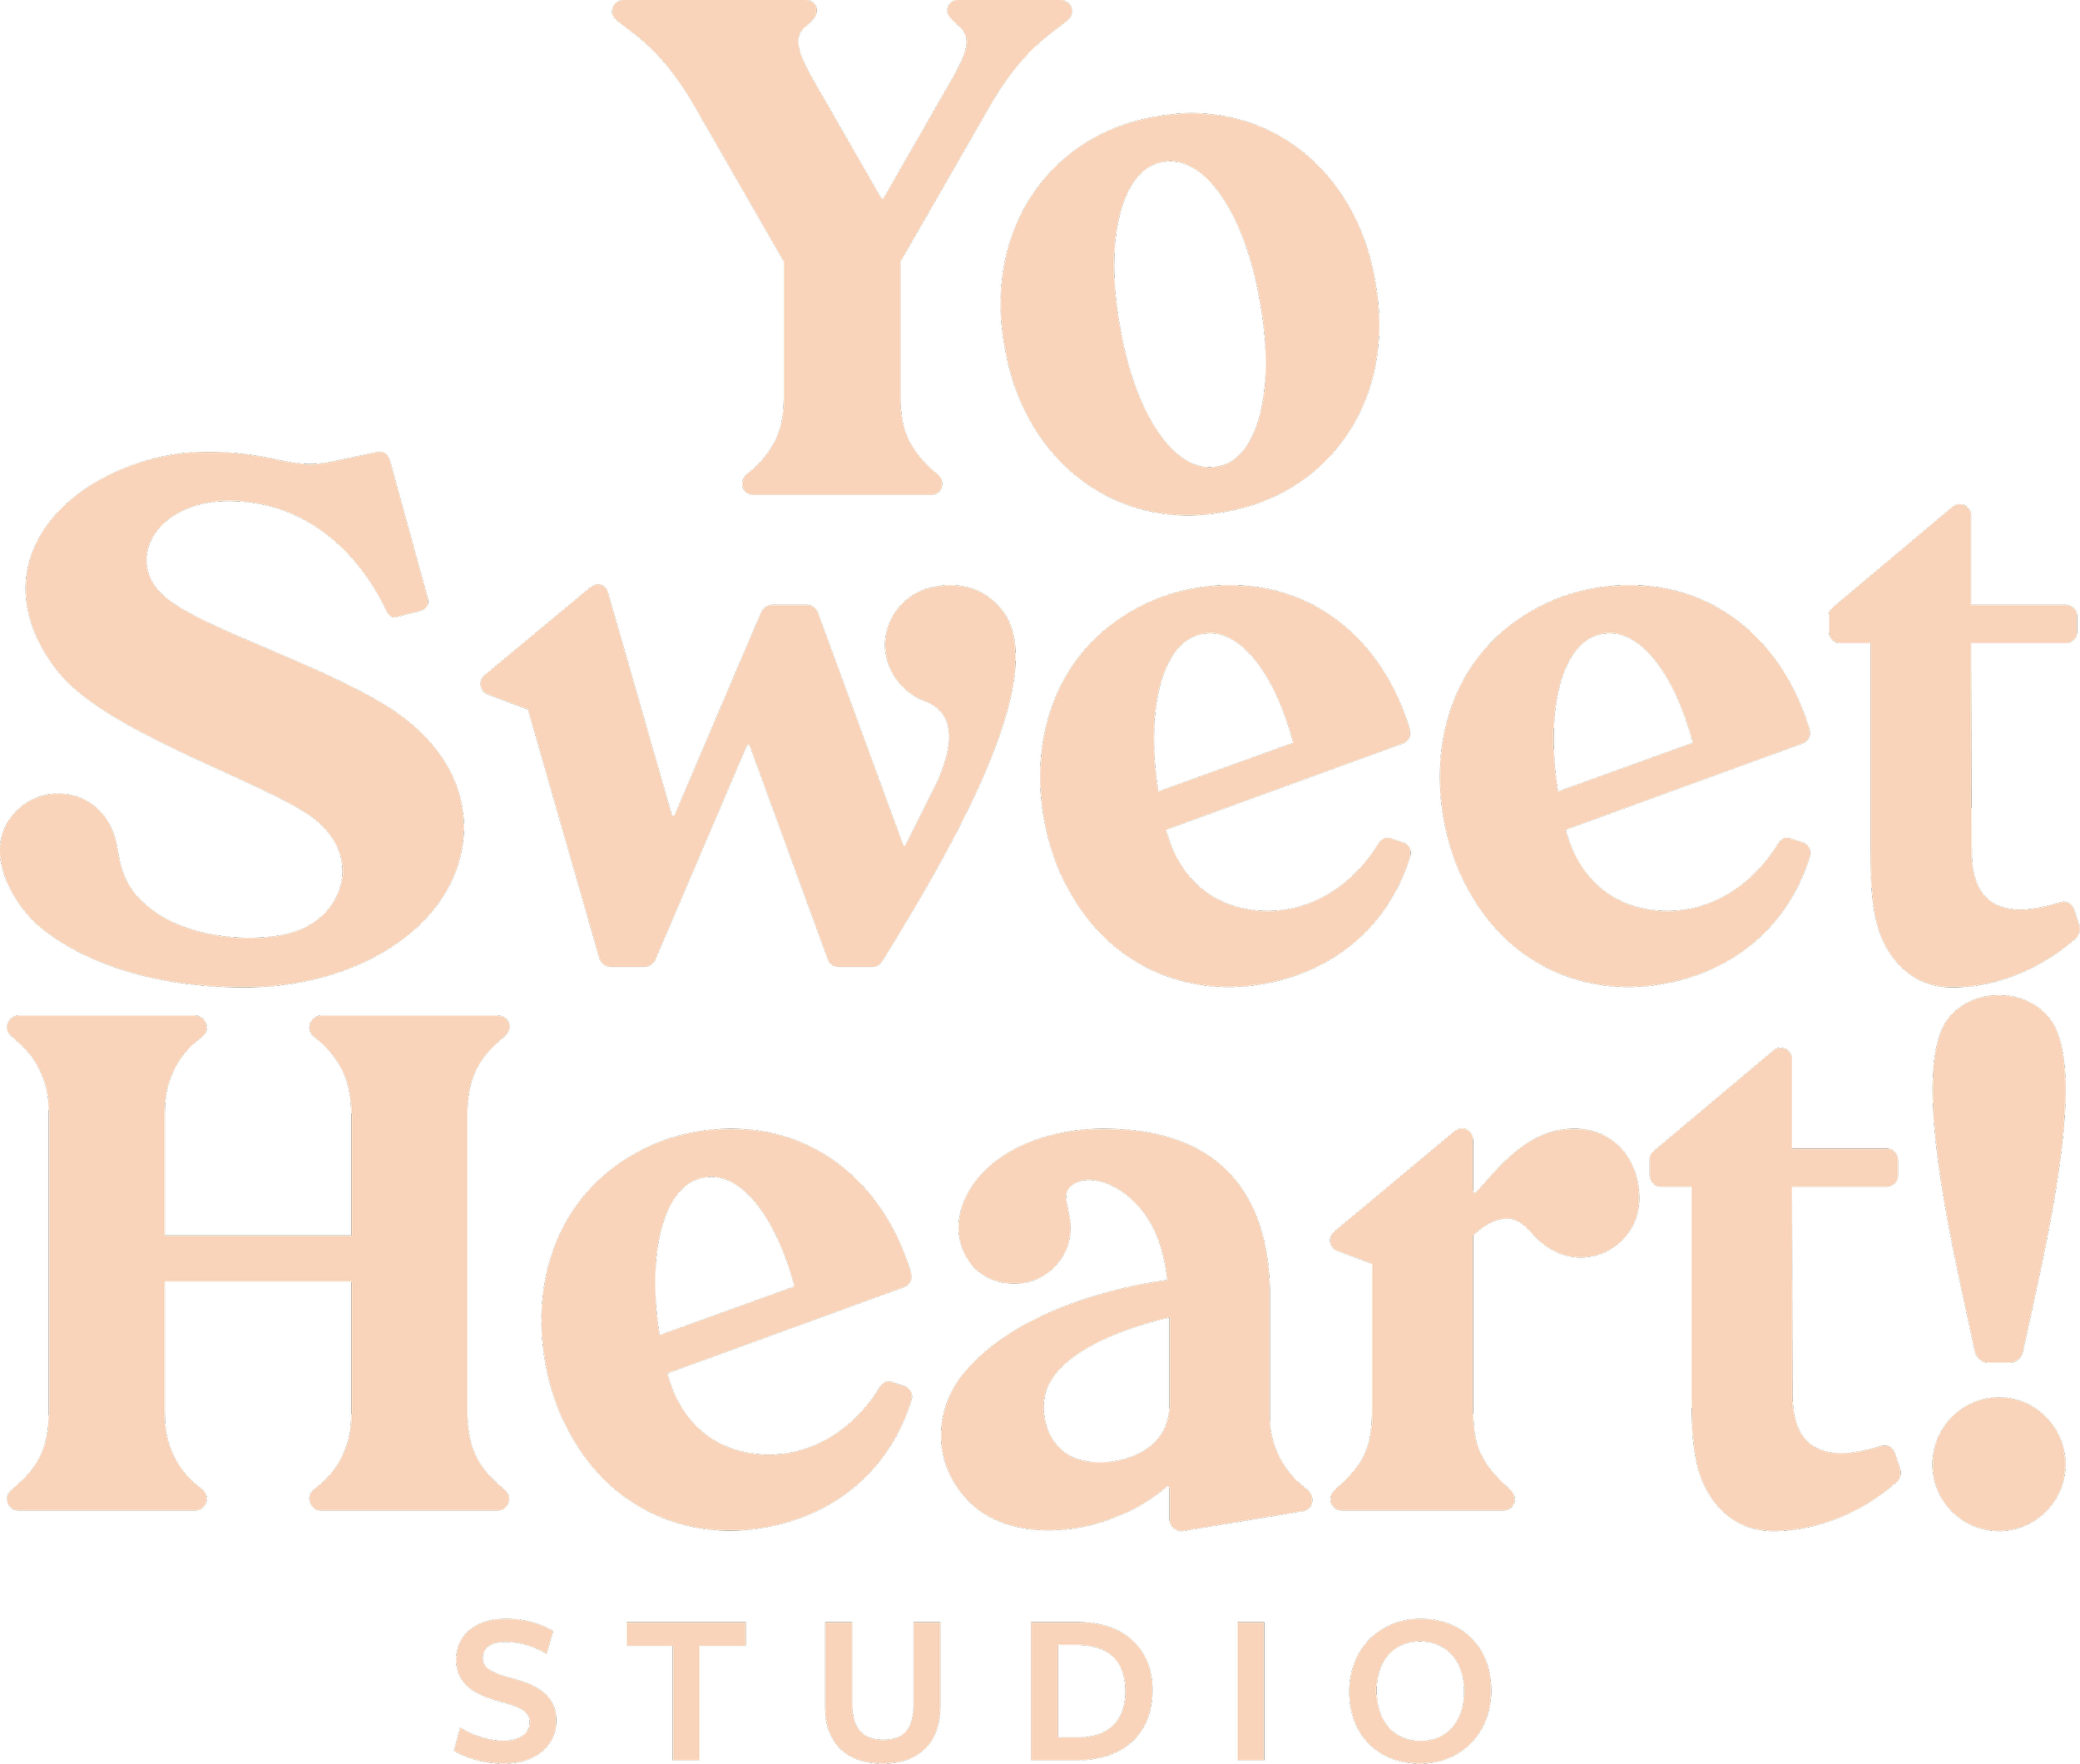 Yo Sweetheart! Studio - Brand & Website Design